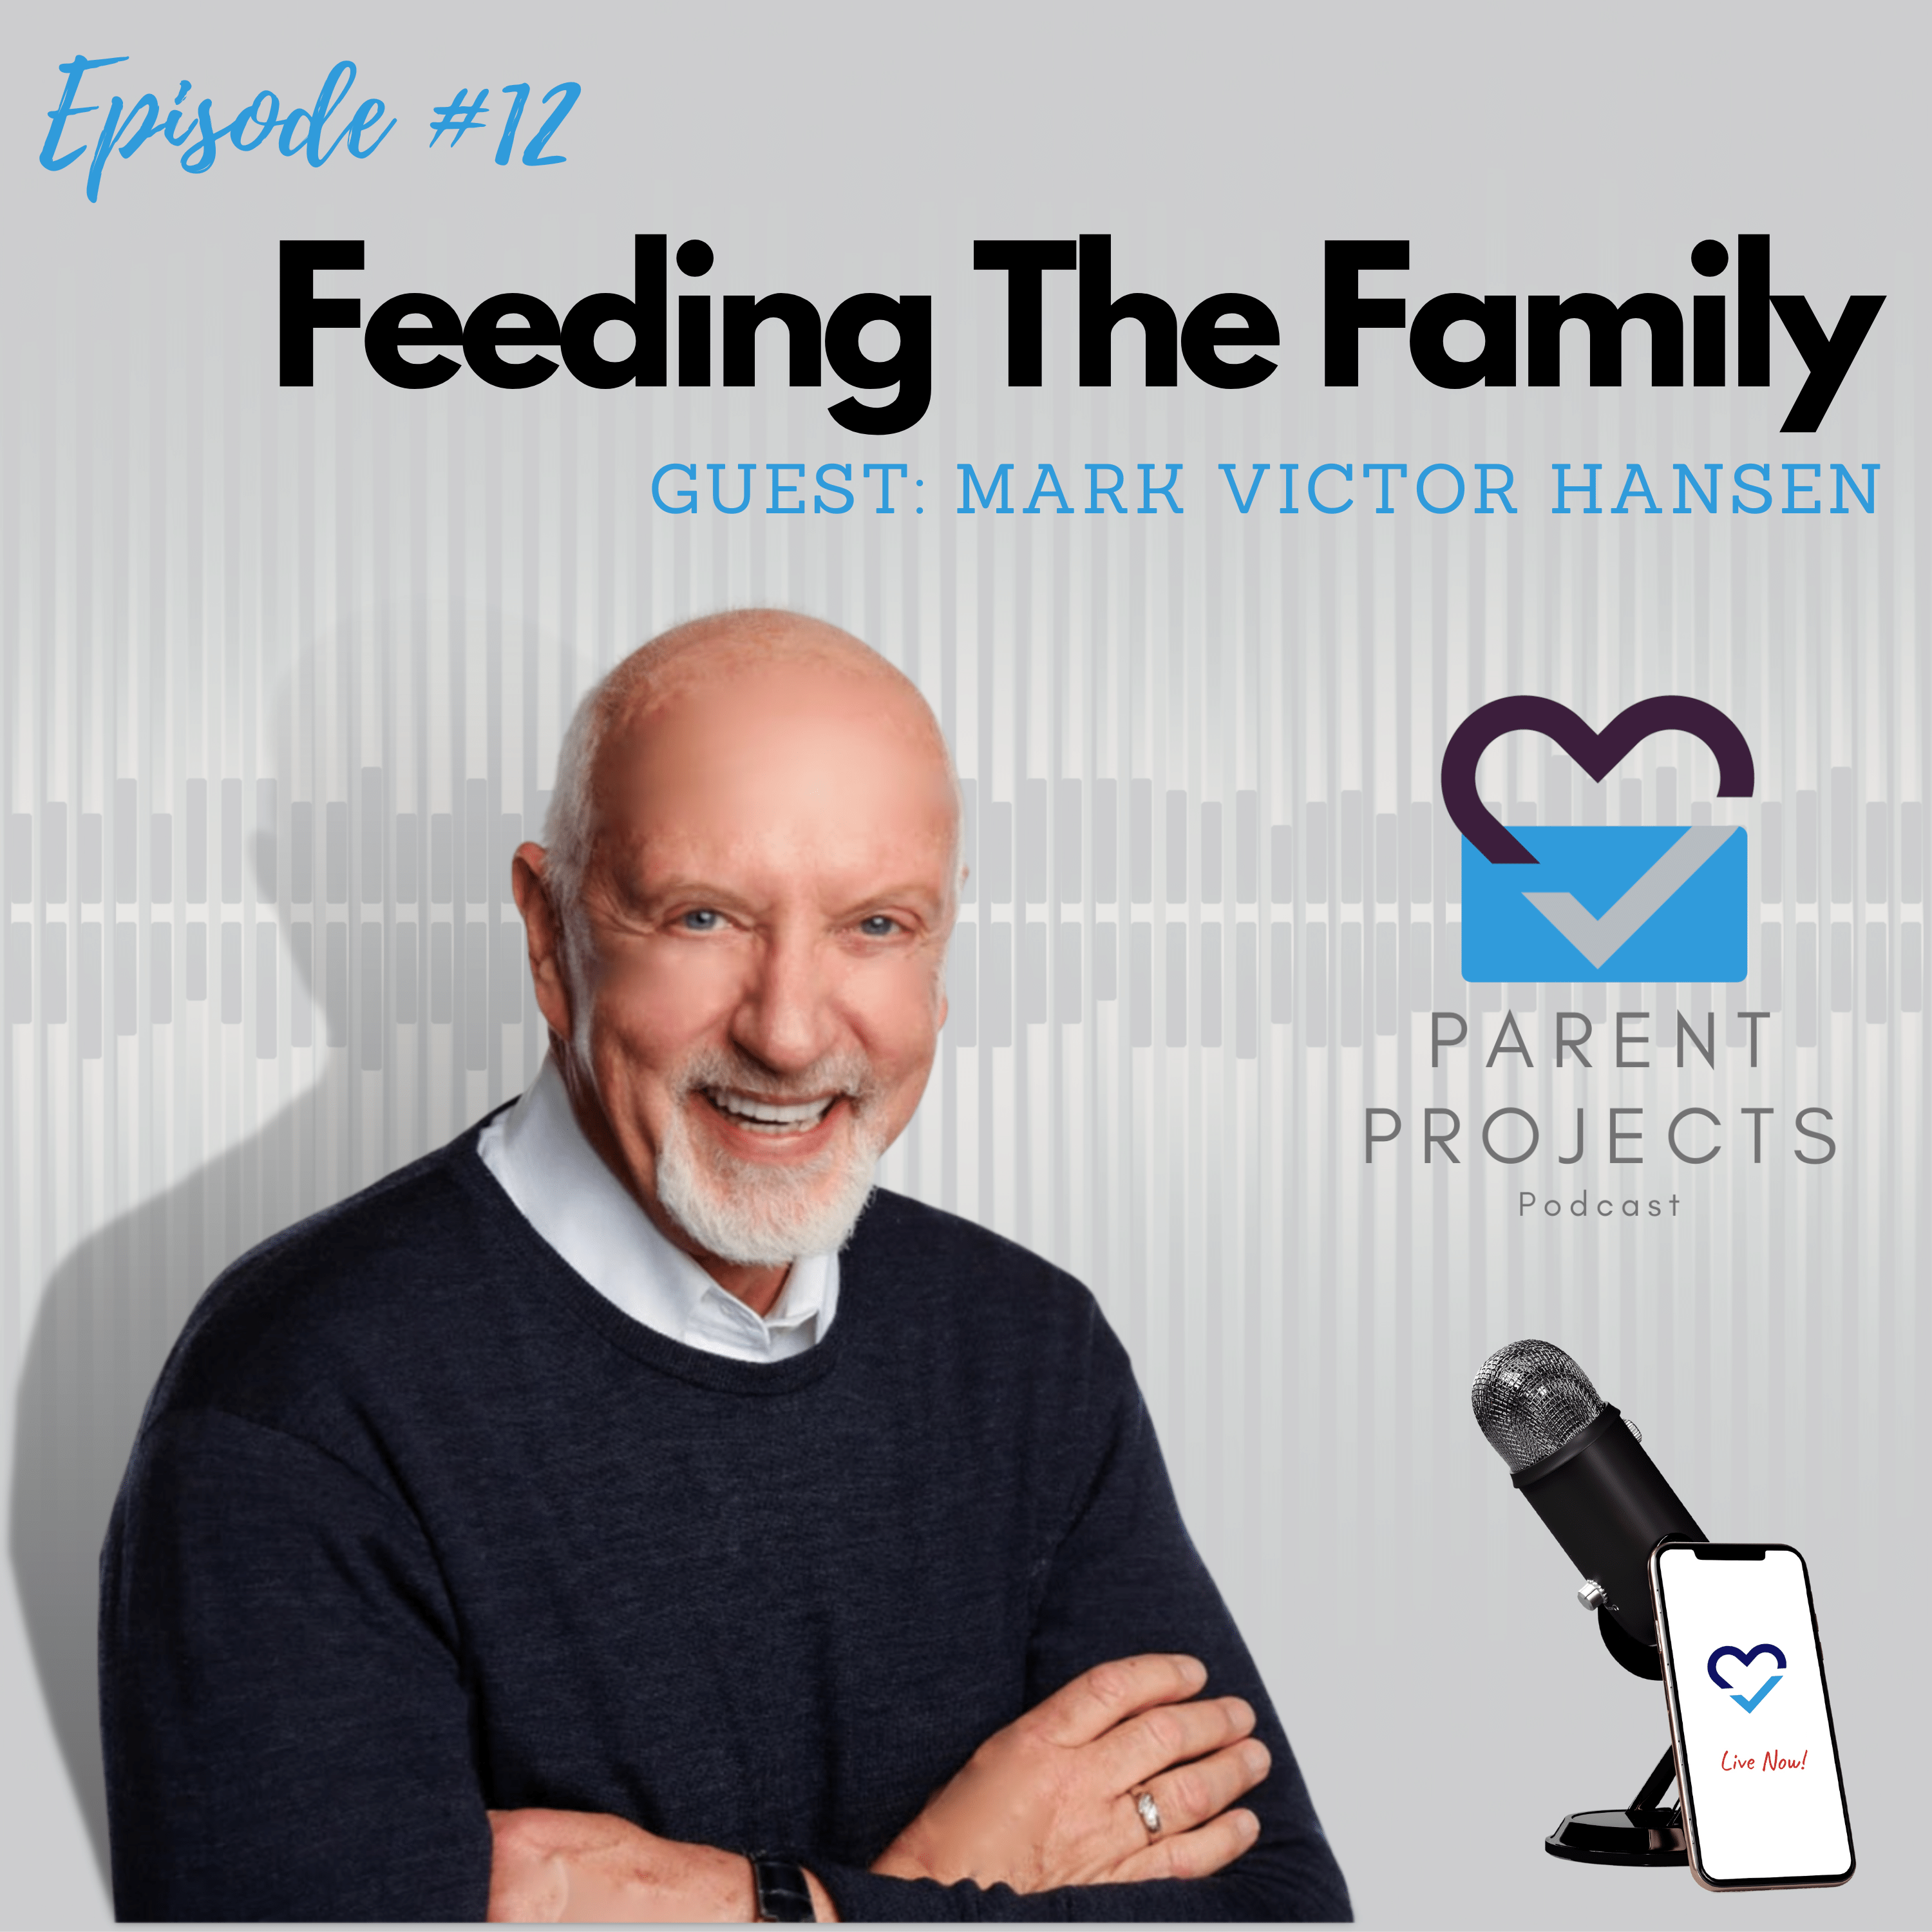 Feeding the Family (Mark Victor Hansen)